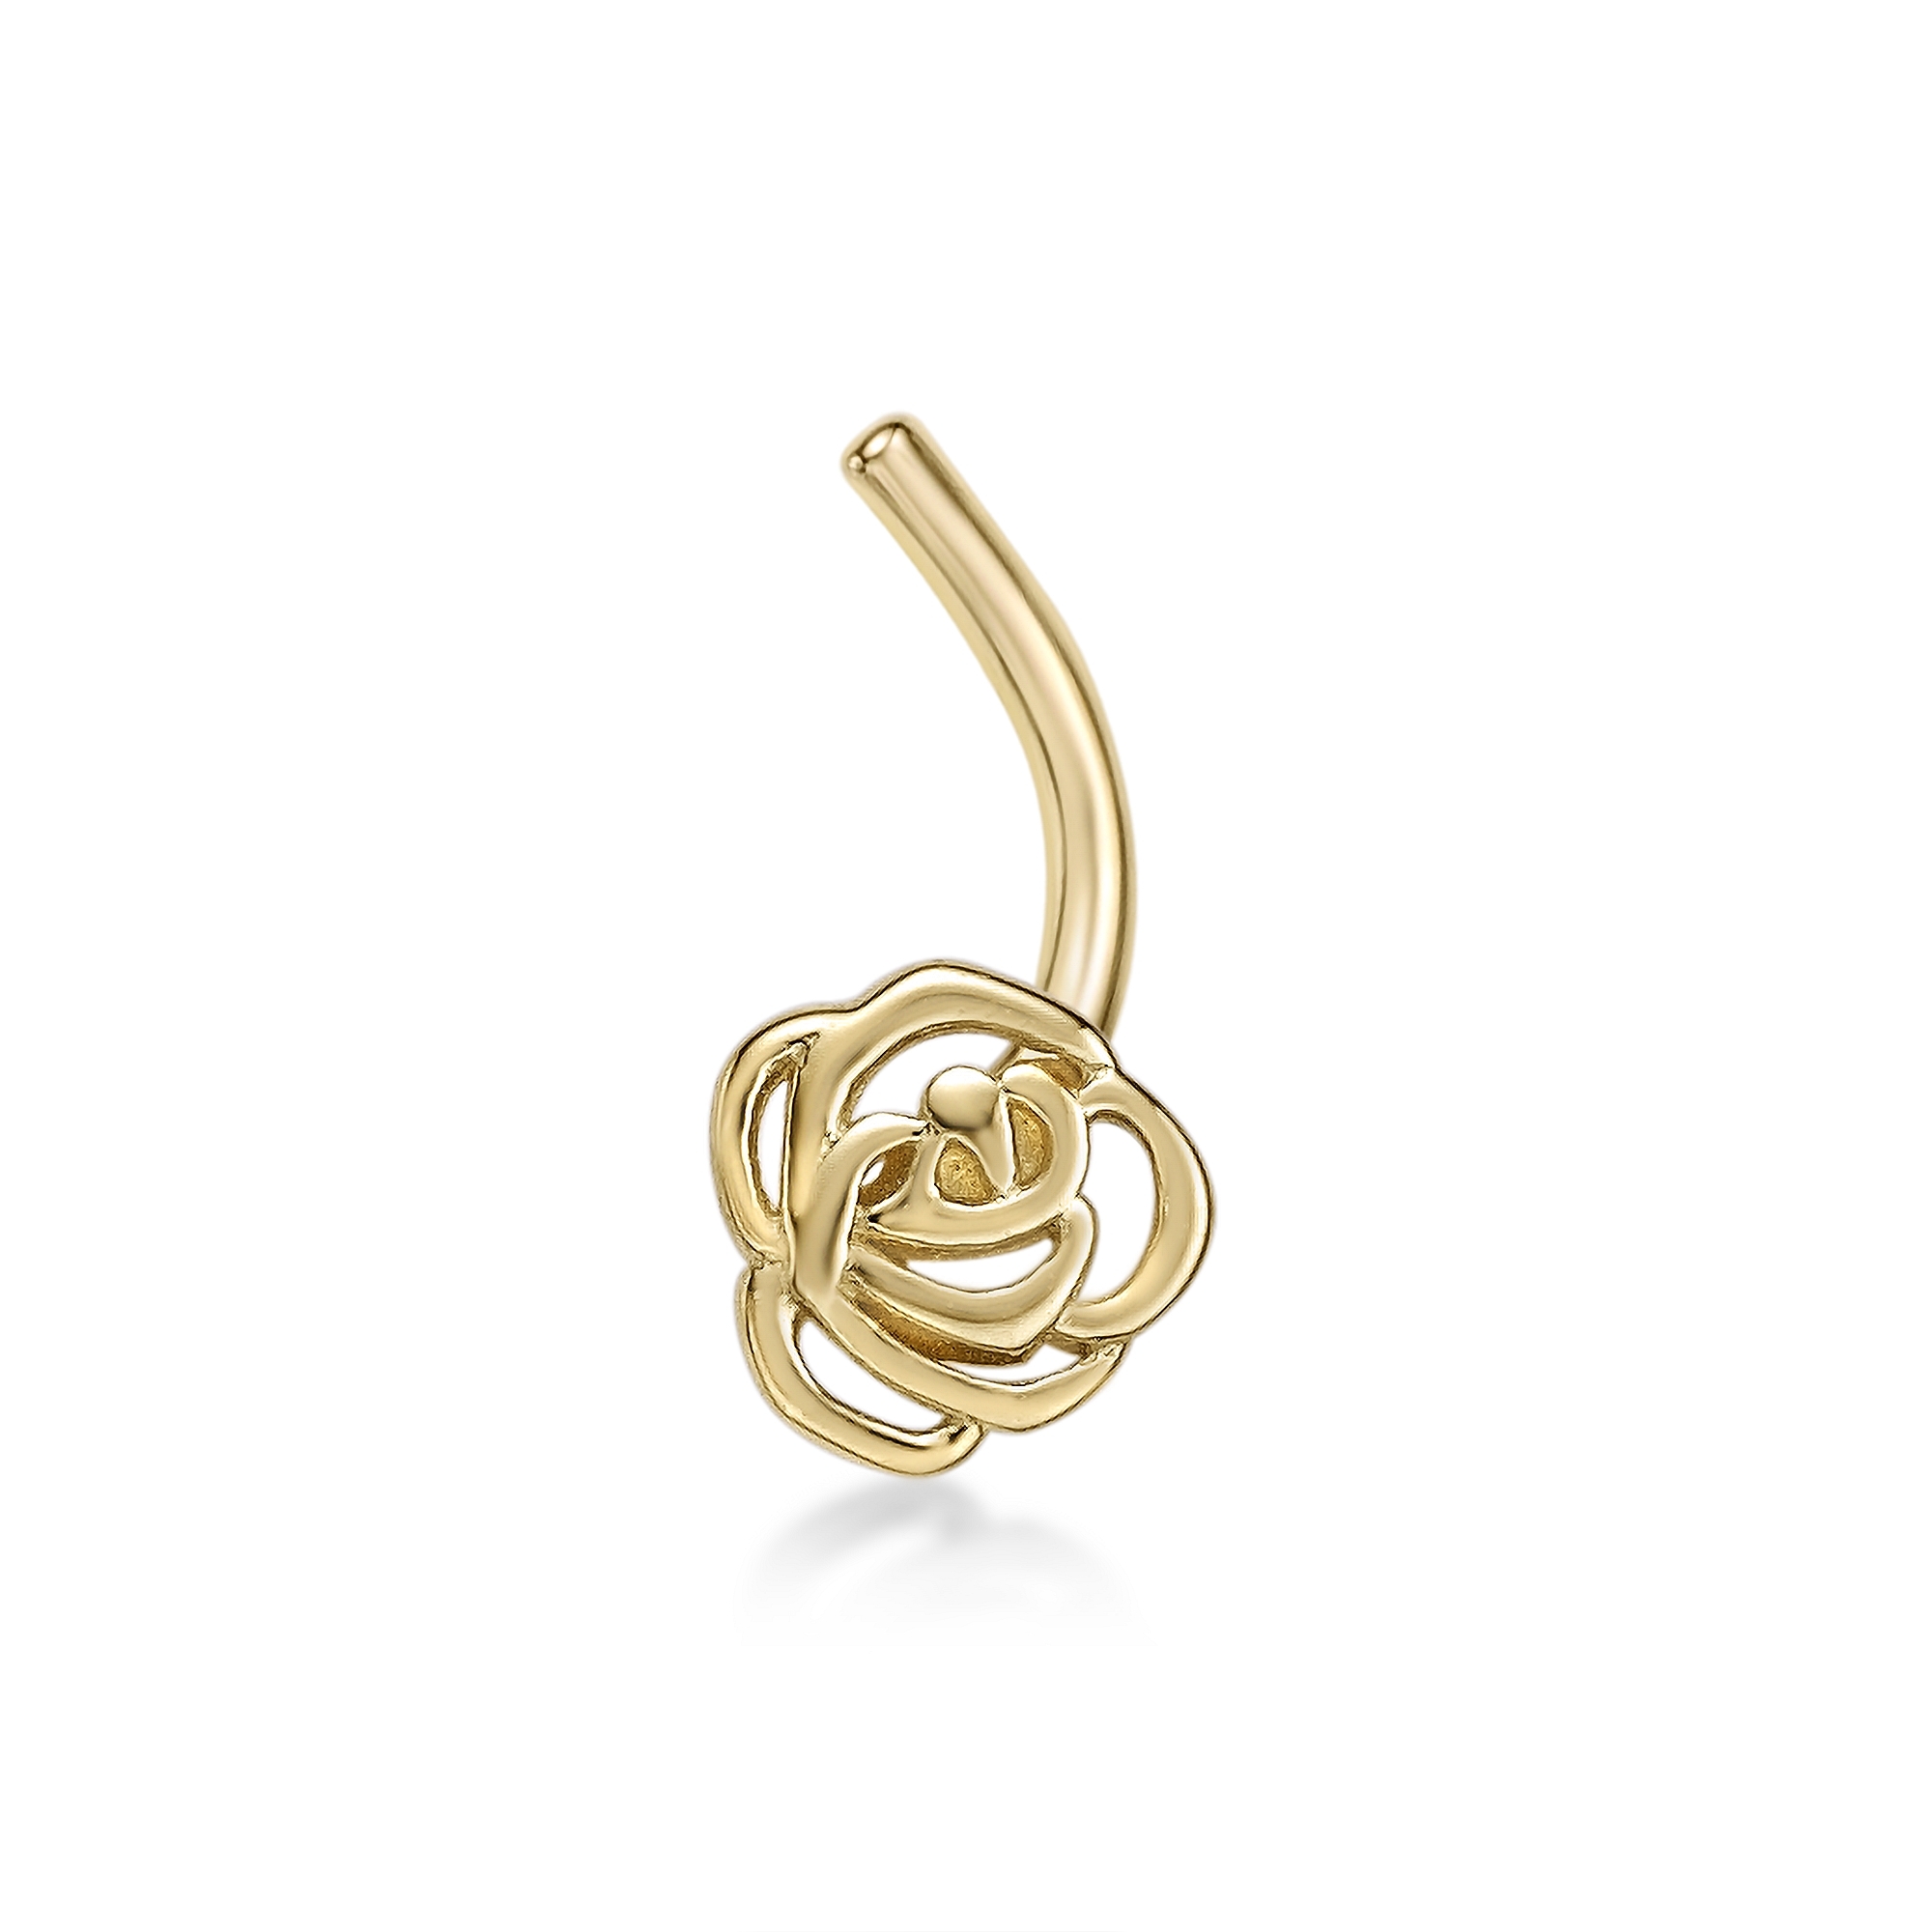 Lavari Jewelers Women's 5 MM Rose Curved Nose Ring, 14K Yellow Gold, 20 Gauge